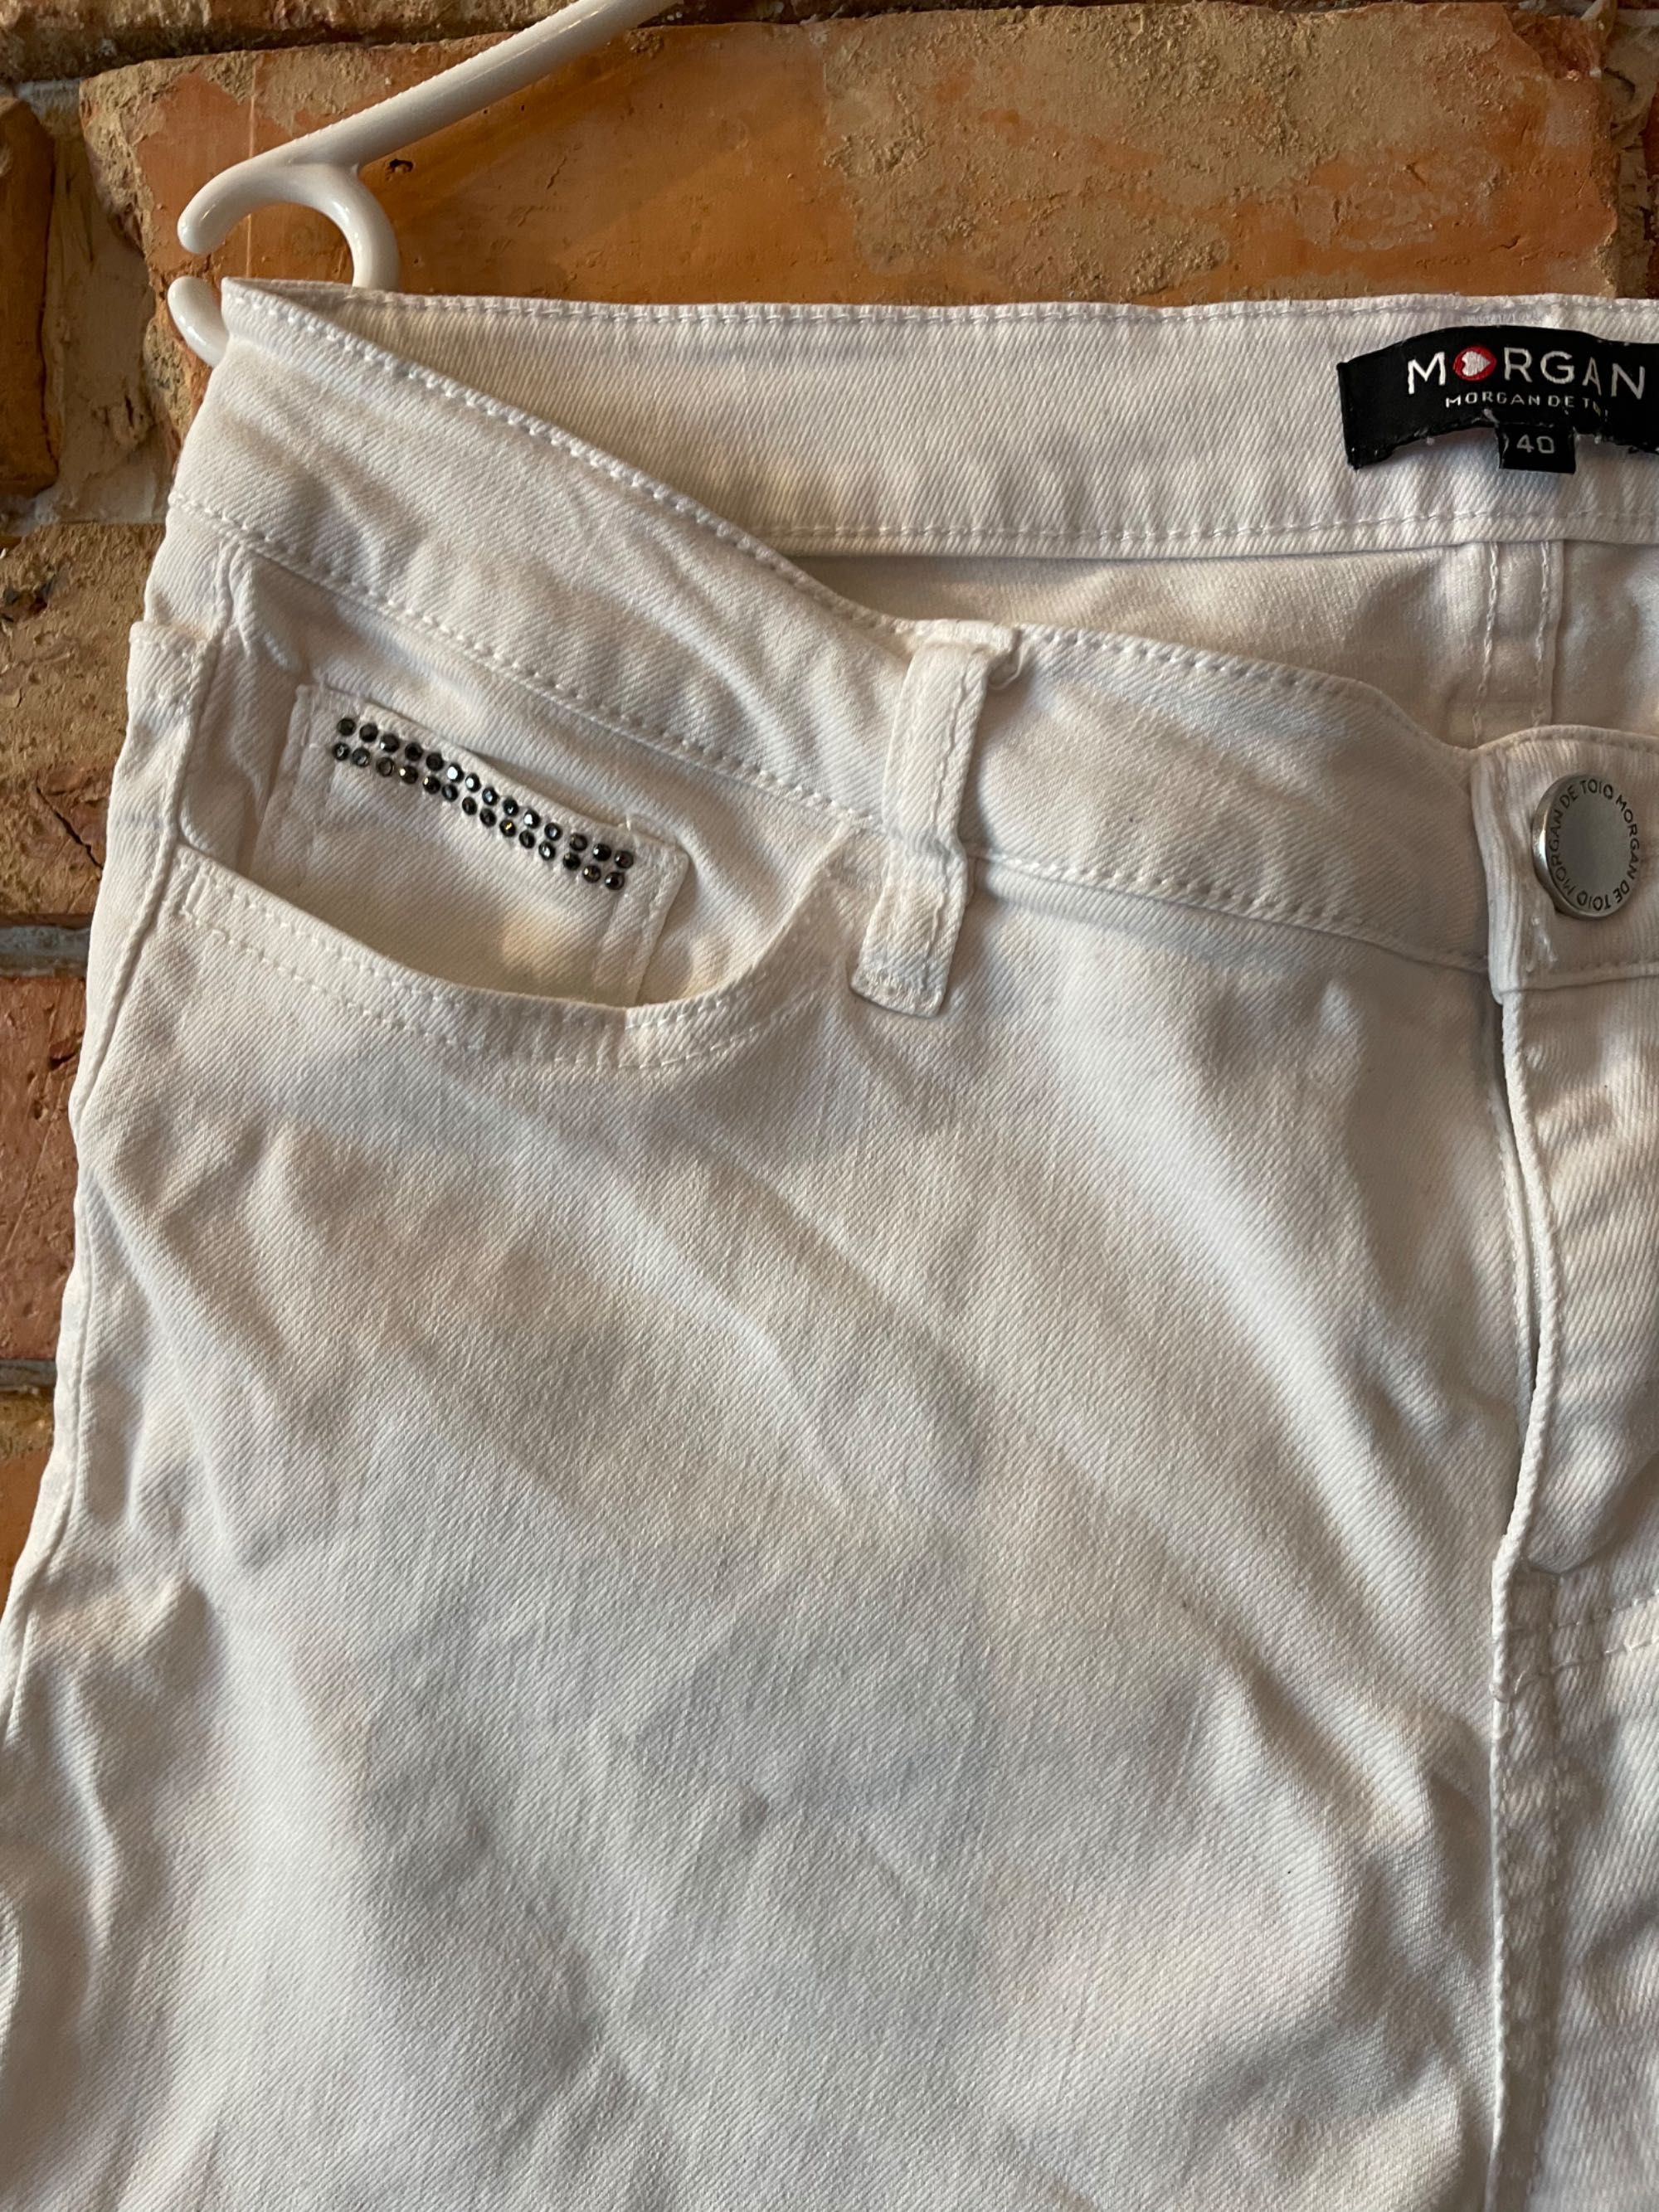 Spodnie białe damskie MORGAN jeansy